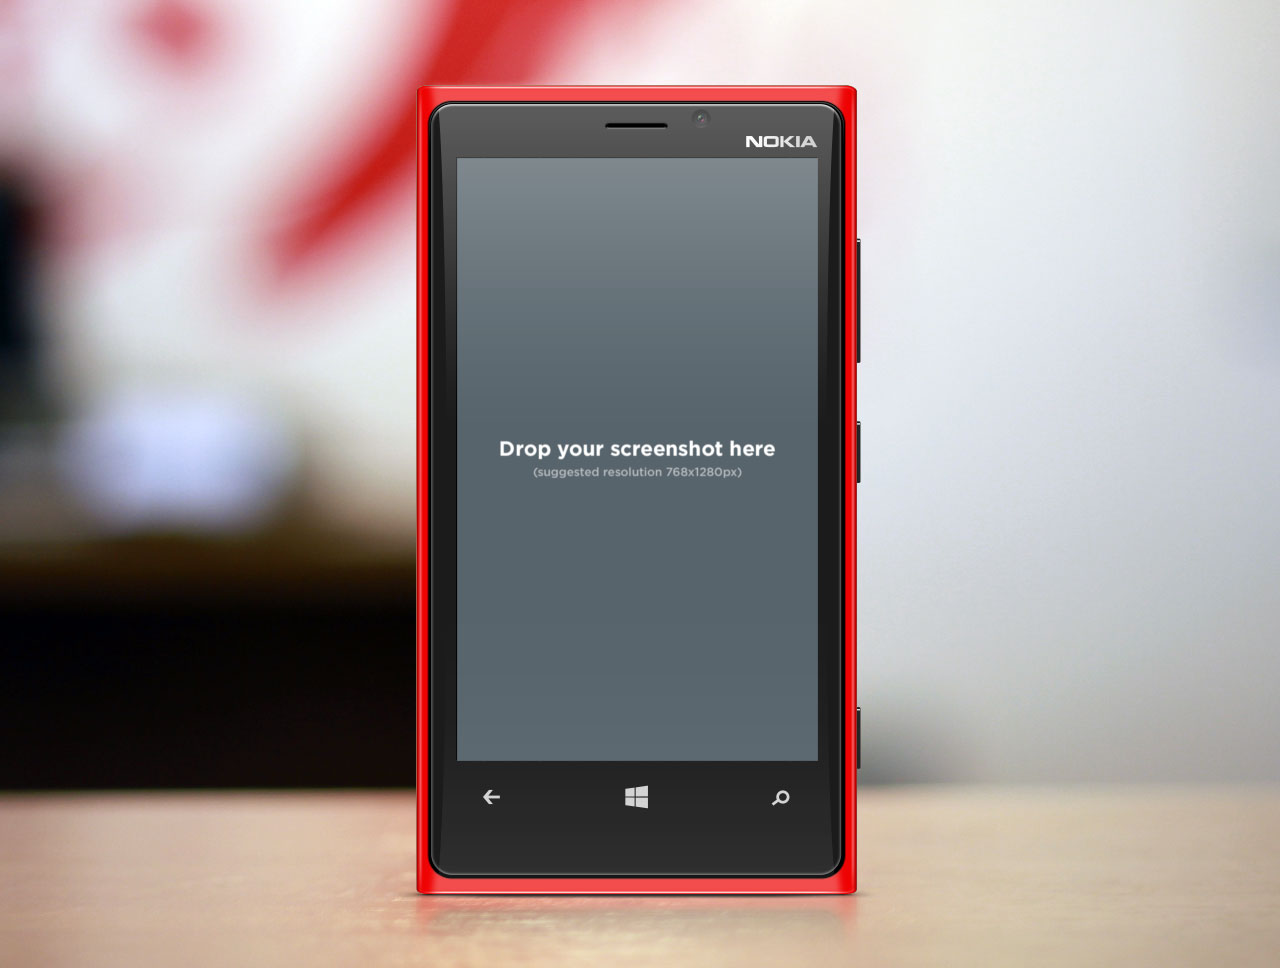 Red Windows Nokia Smartphone Mockup Product Shot